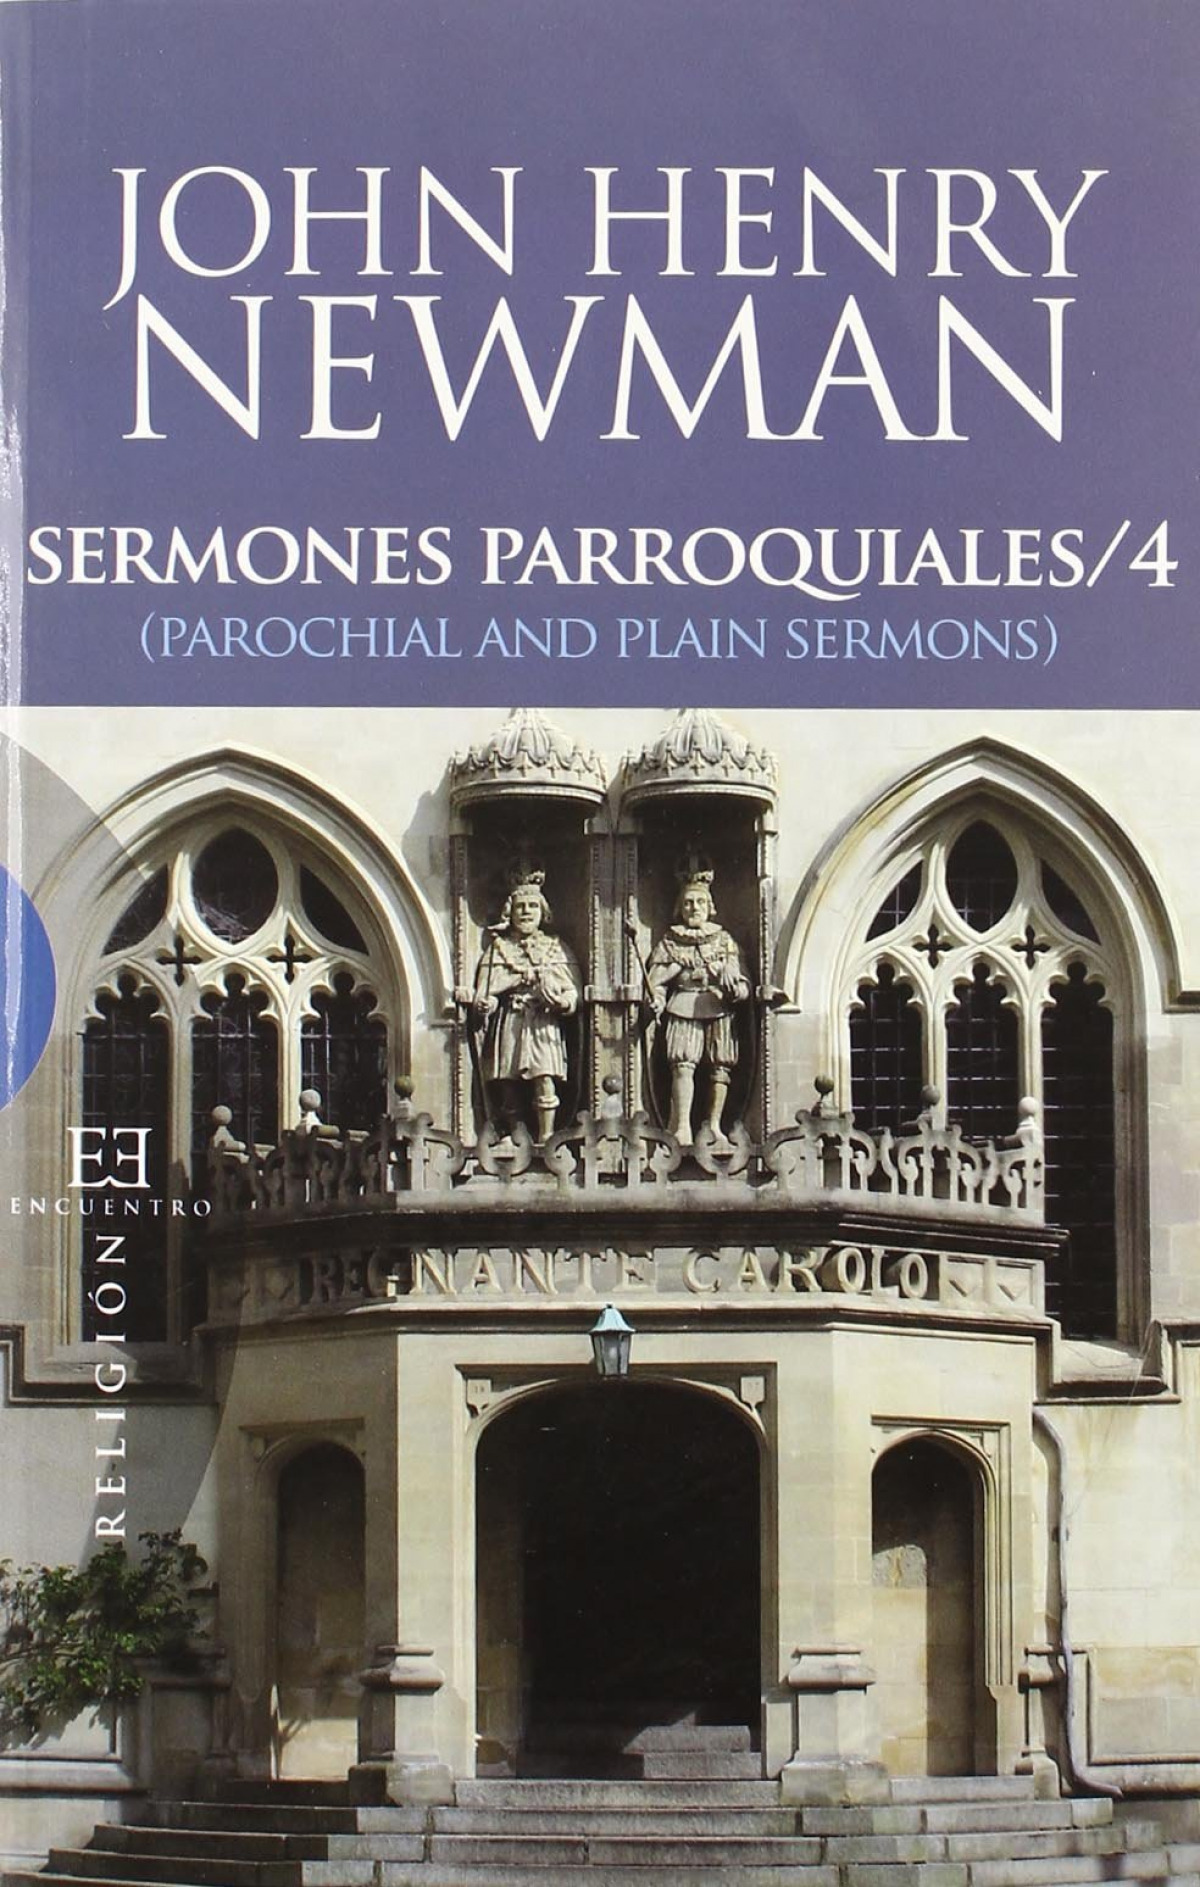 Sermones parroquiales 4 = Parochial and plain sermons - Newman, John Henry